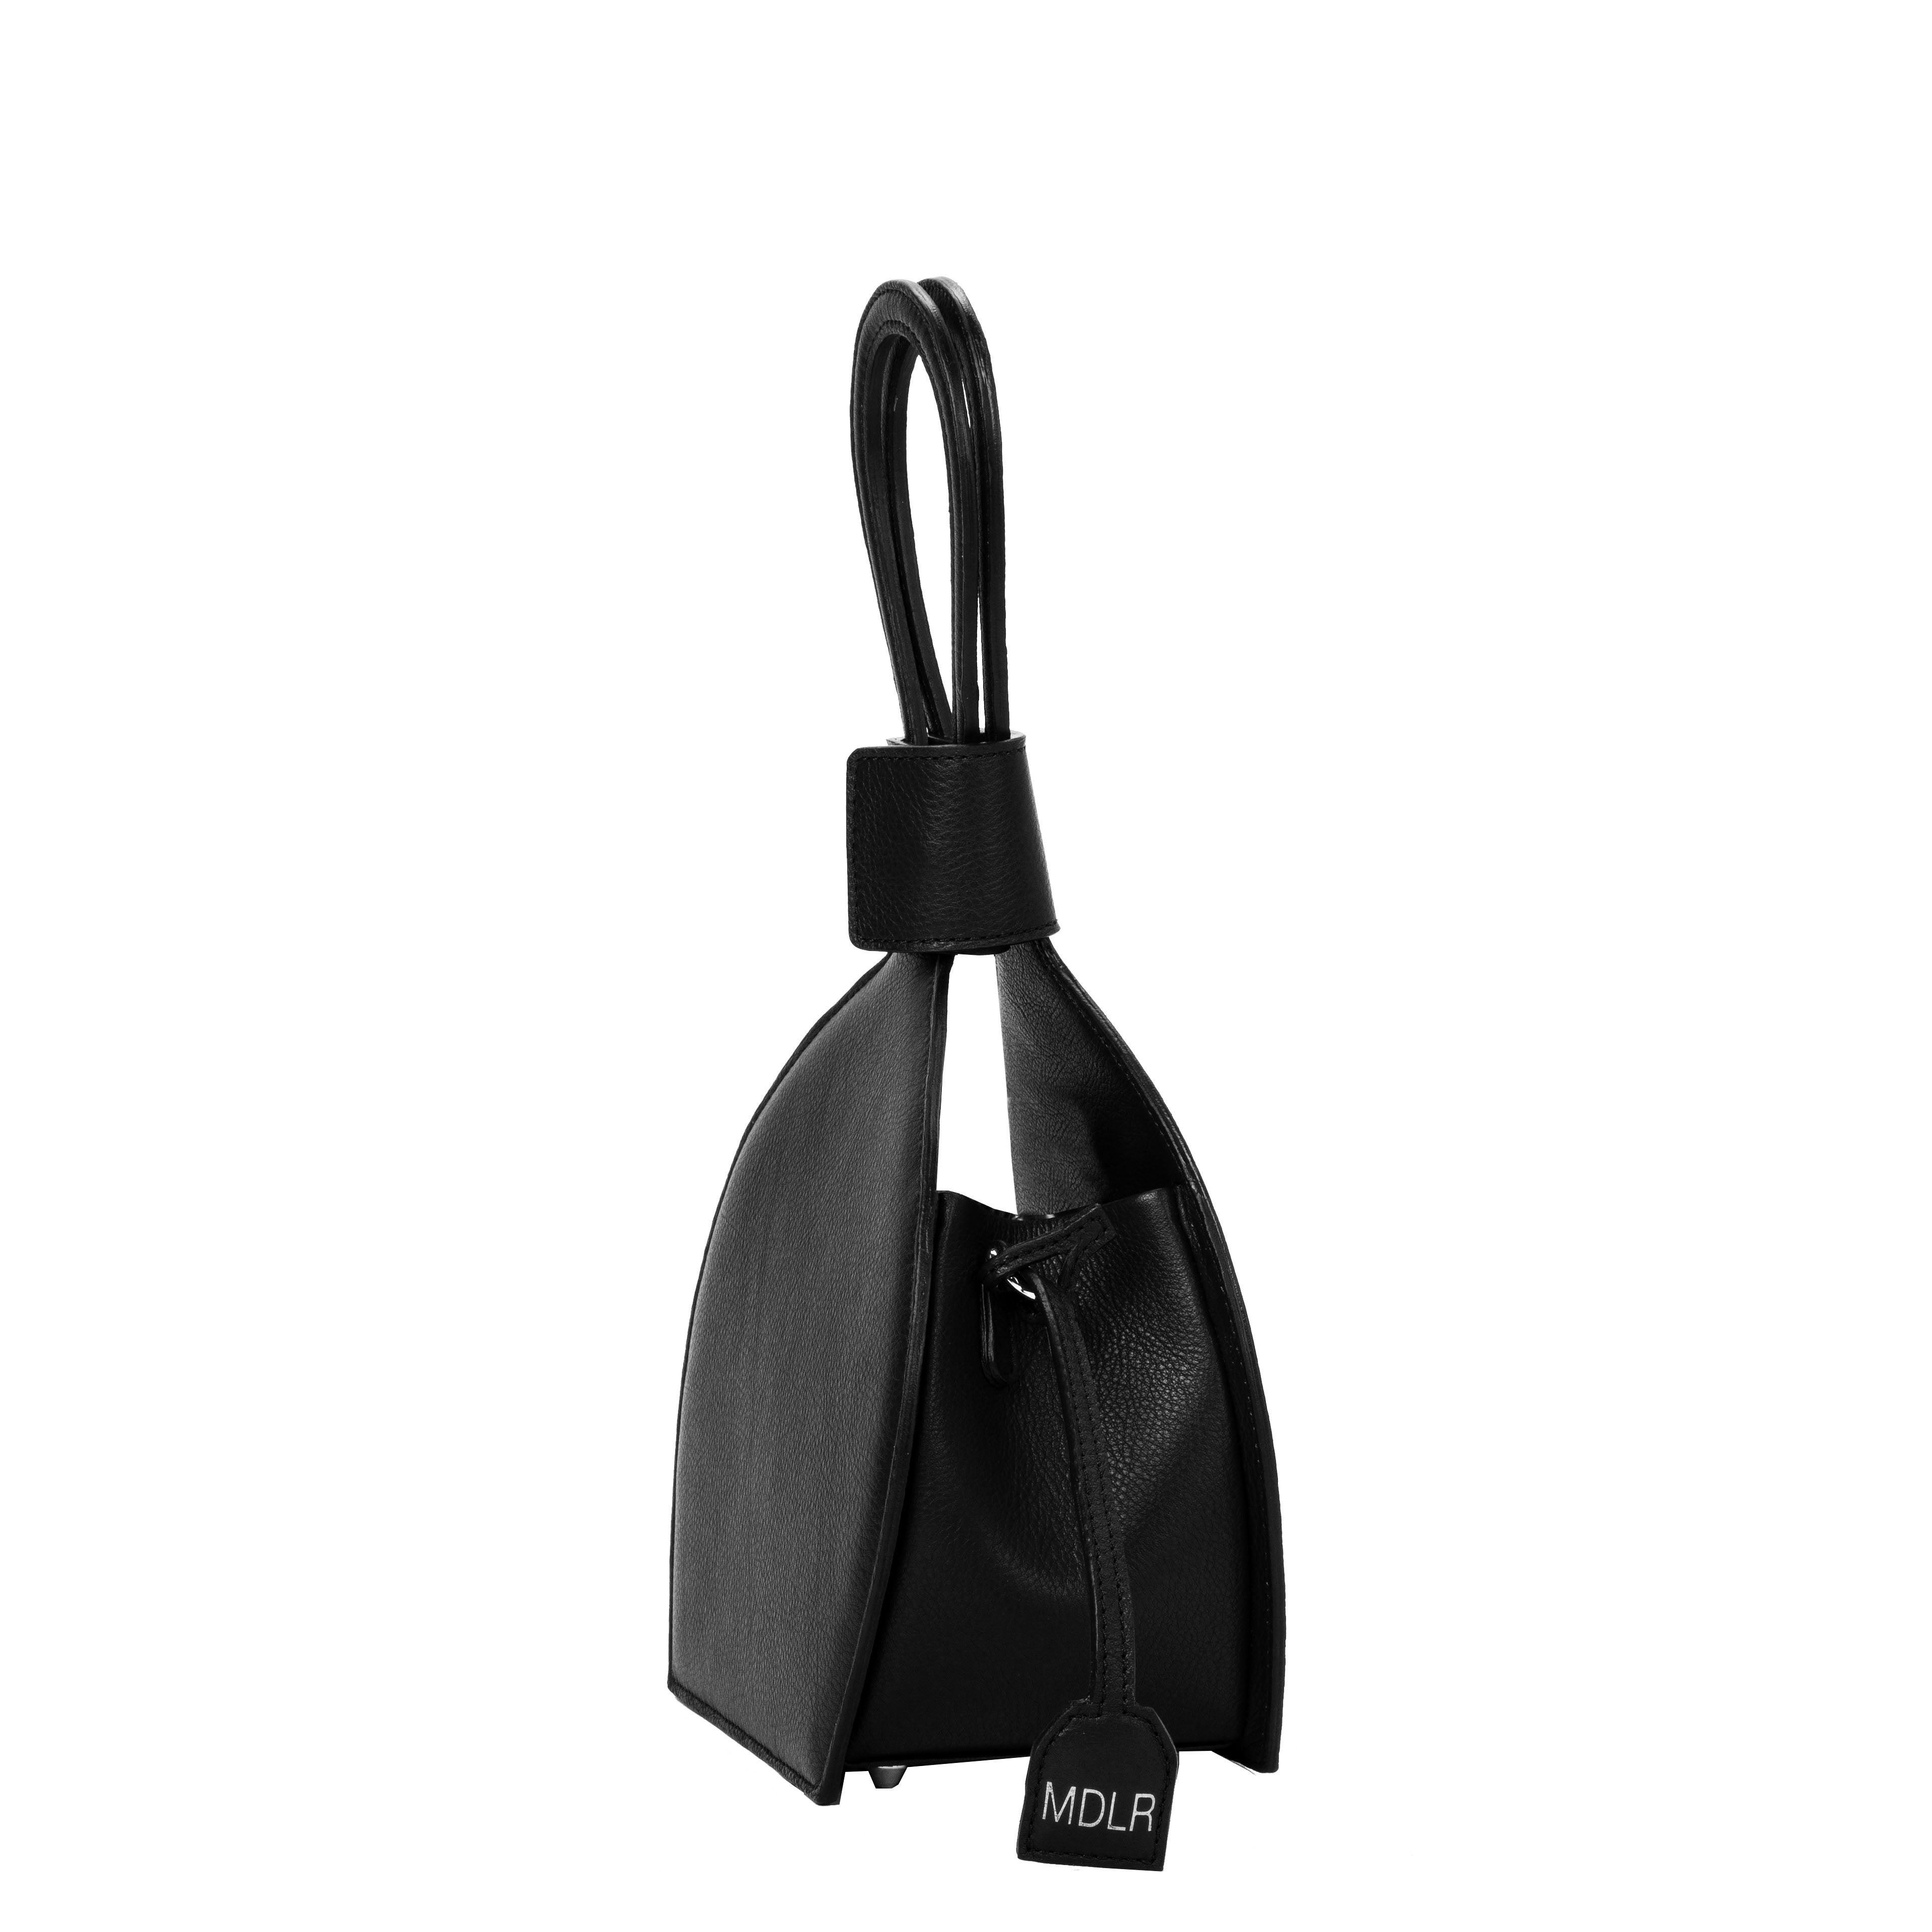 ATENA BLACK PURSE-SLING BAG, a black bag, handbag with minimalist look from MDLR